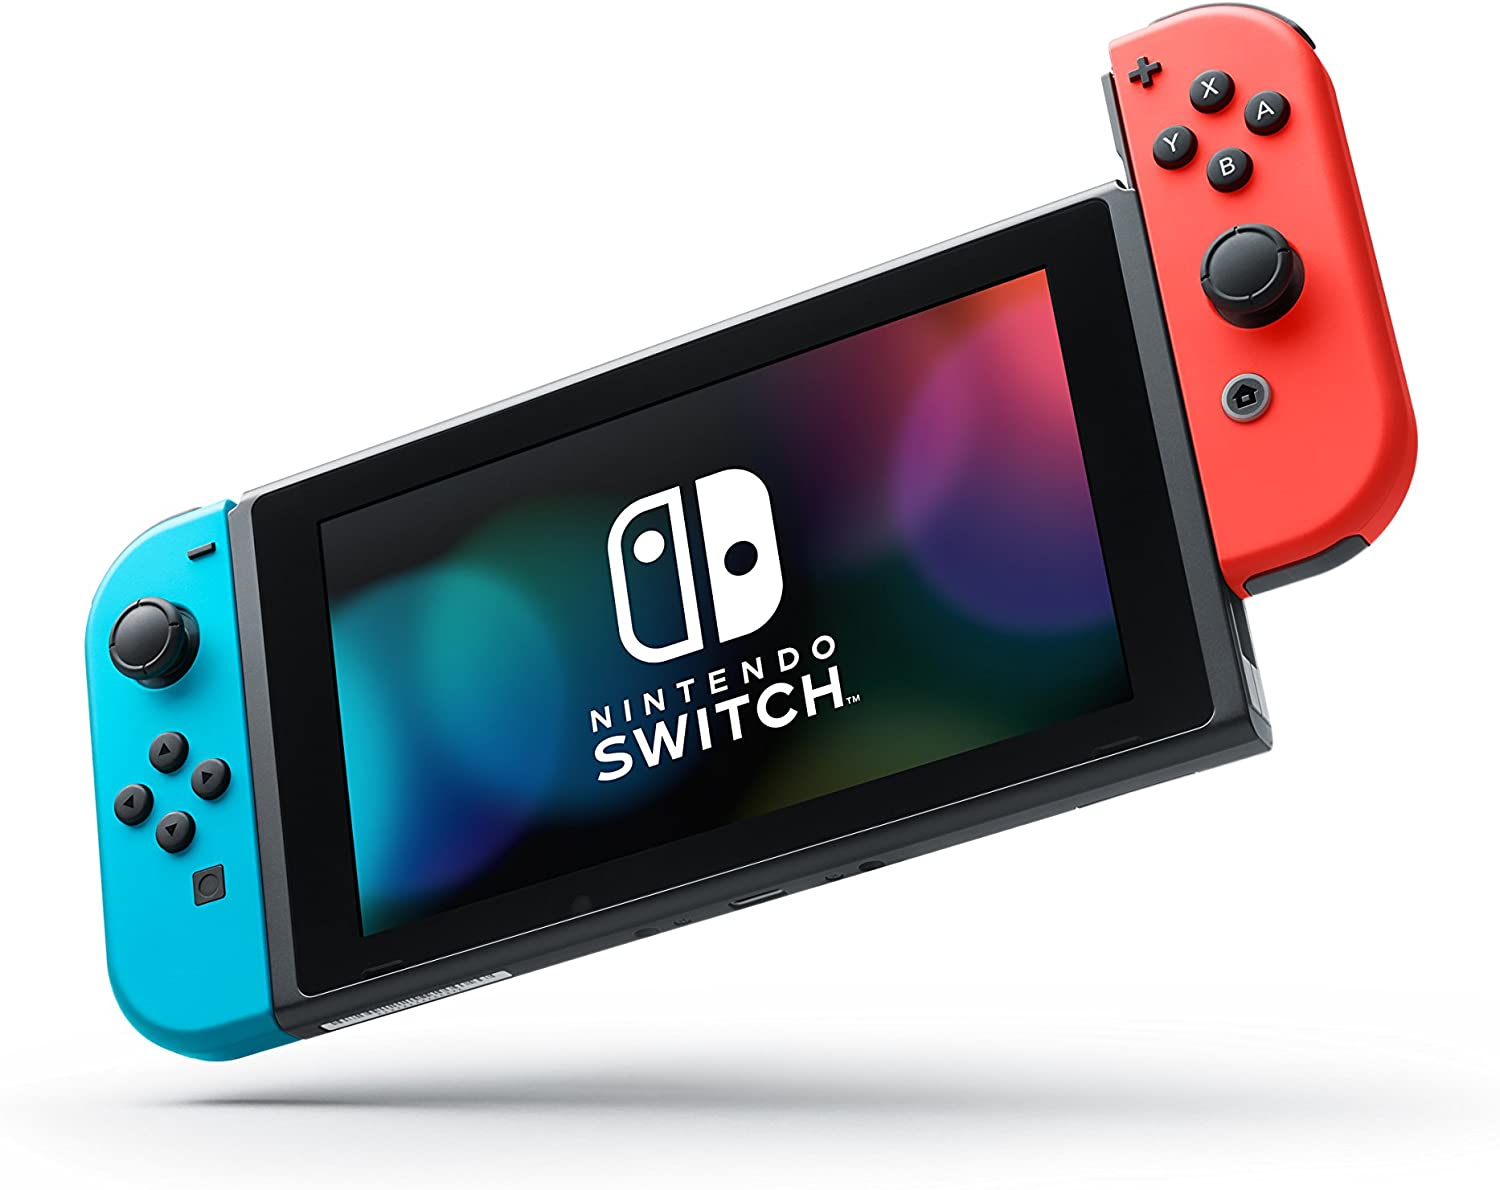 Prezzo console Nintendo Switch: da Esselunga in offerta a 279 euro